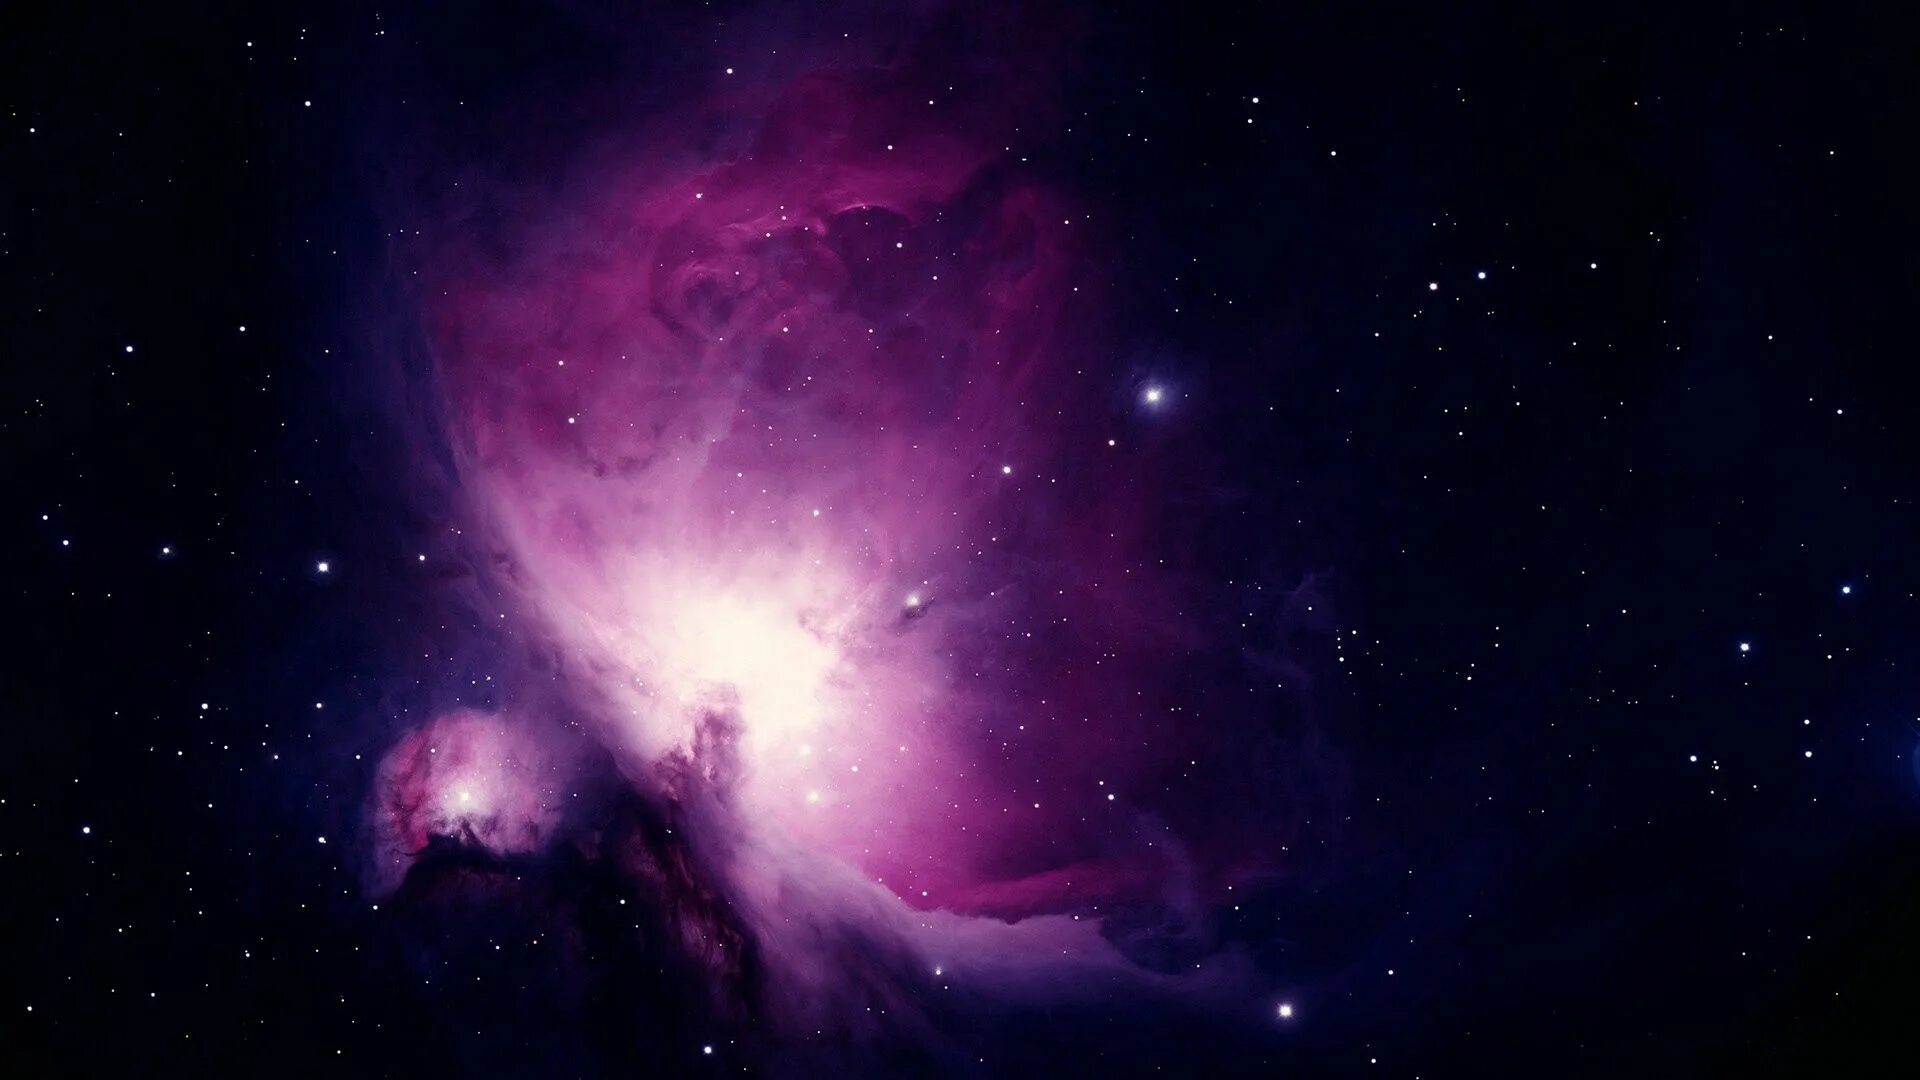 1024 x 576 для ютуба. Галактика туманность Ориона. Галактика Небула. Космос звезды Галактика туманность. Обои космос.